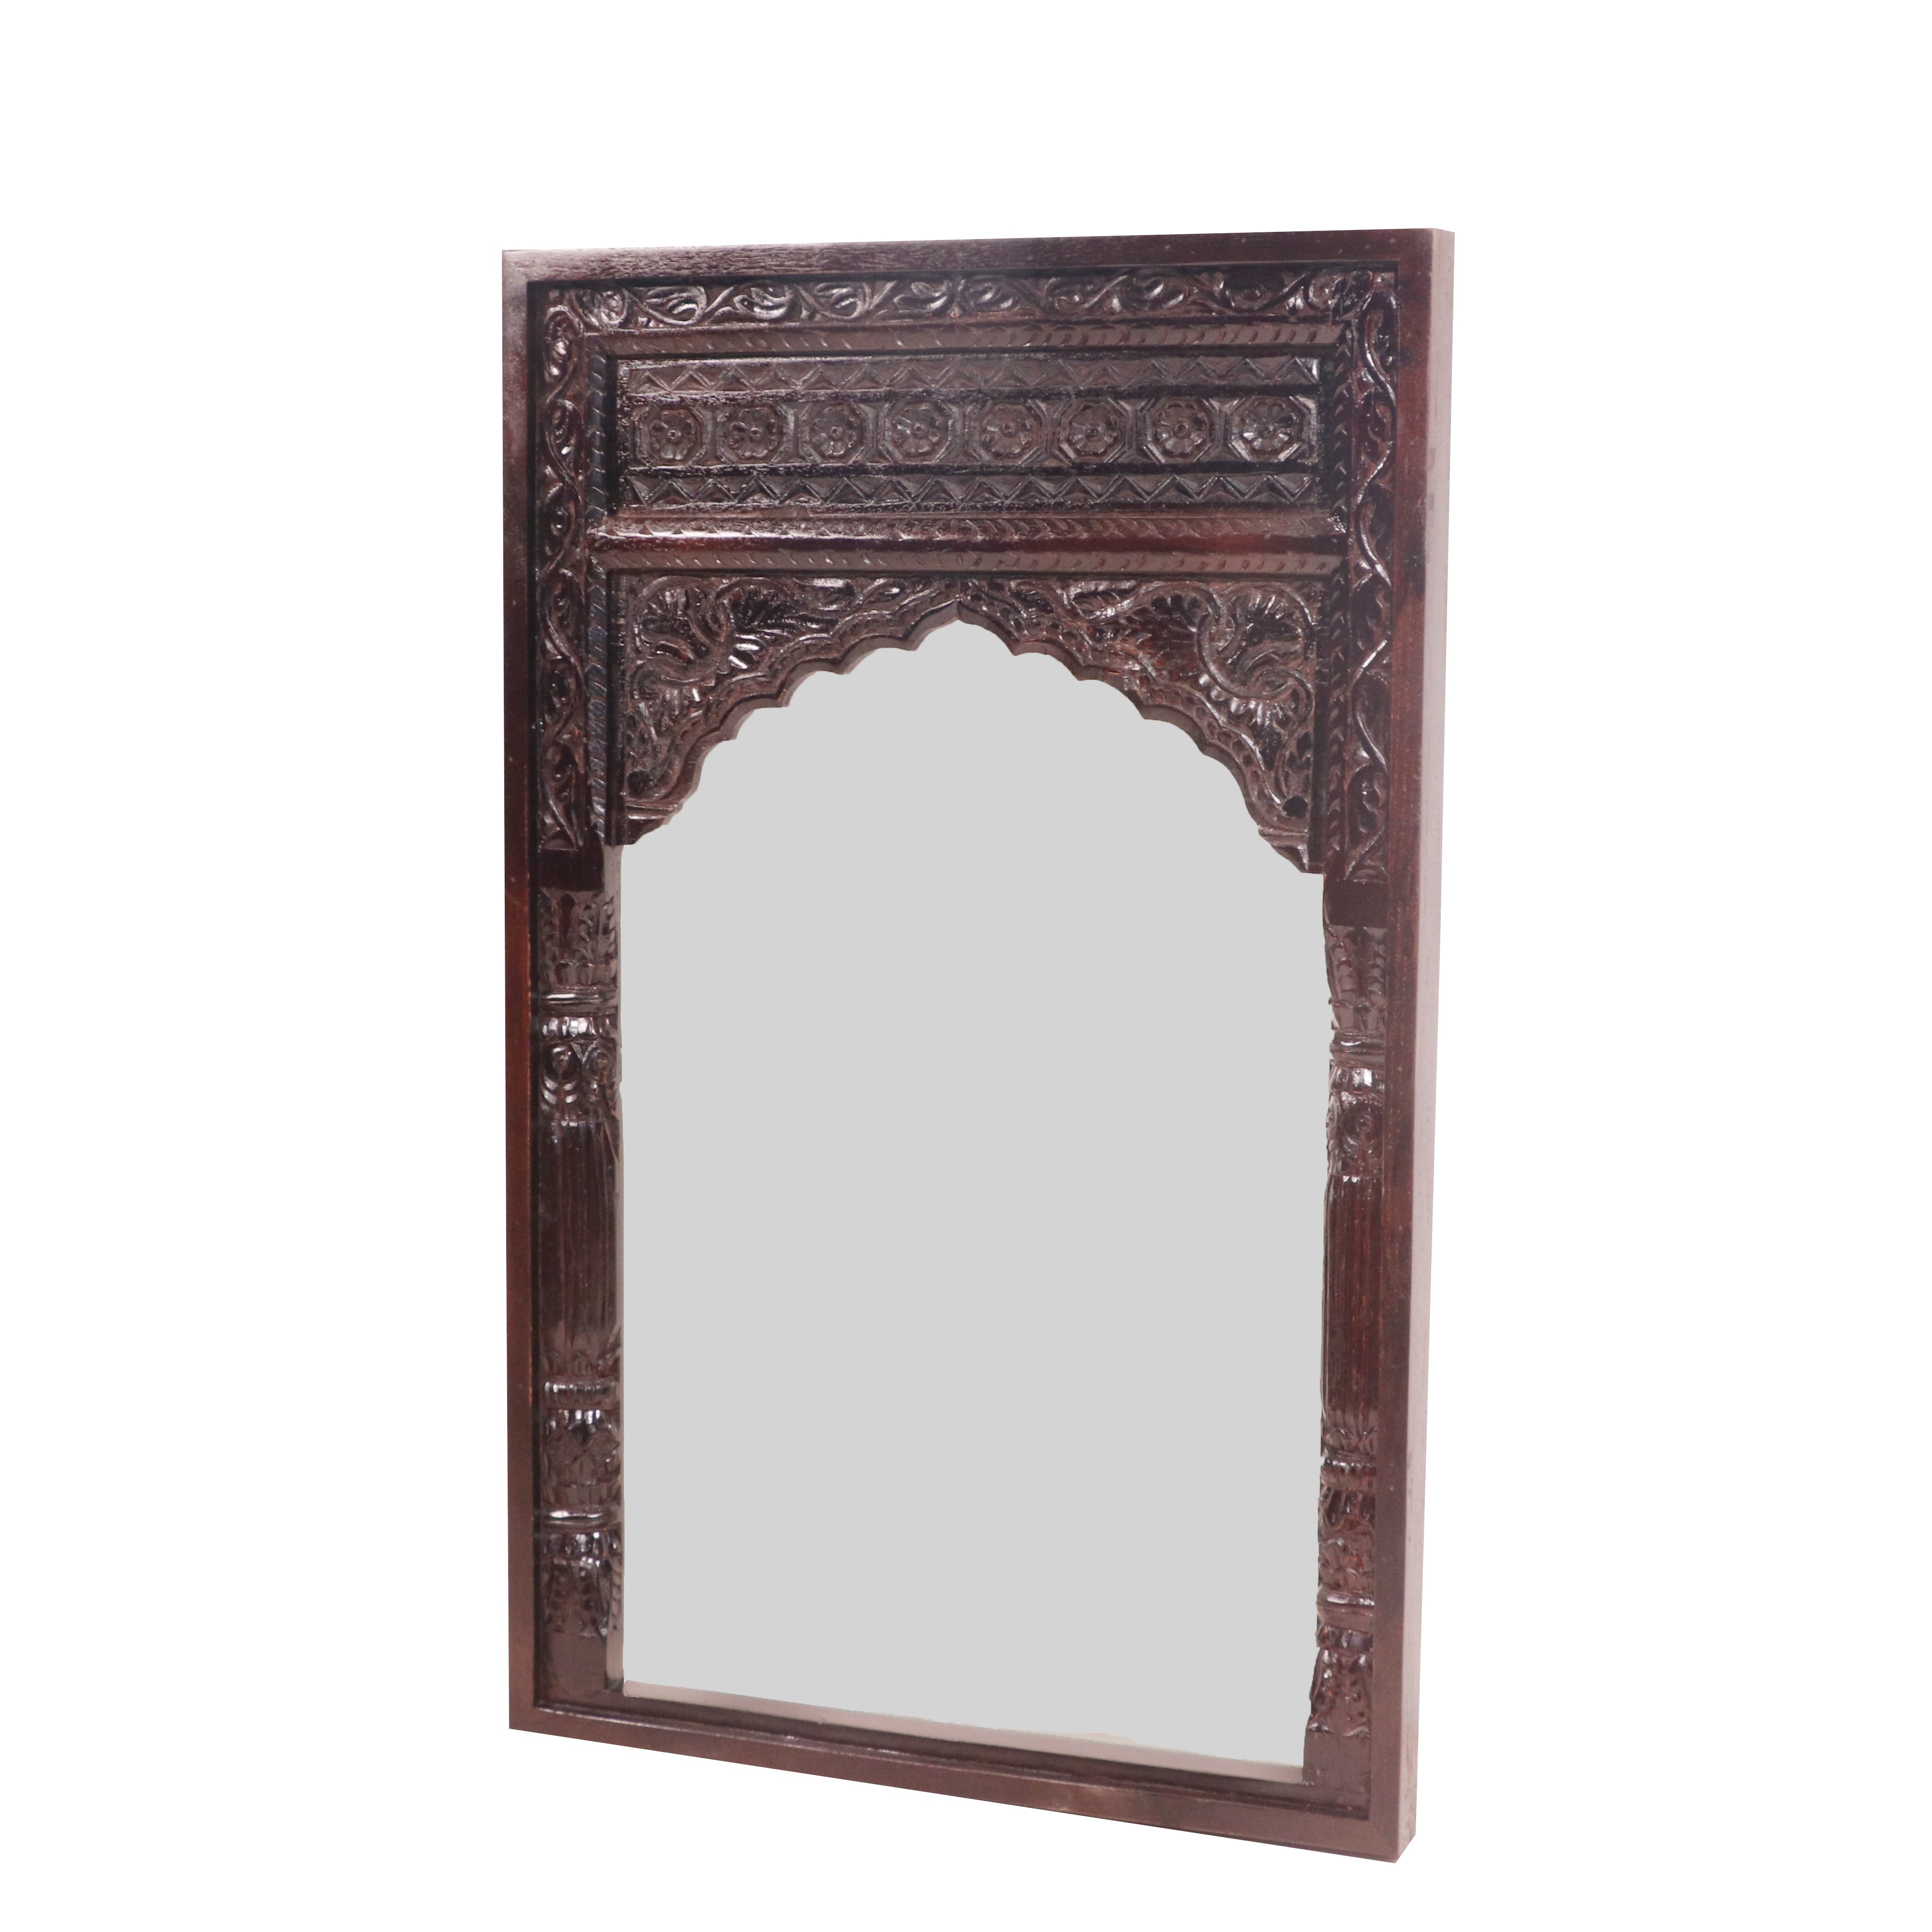 Ethnic Wooden Carved Mirror Mirror